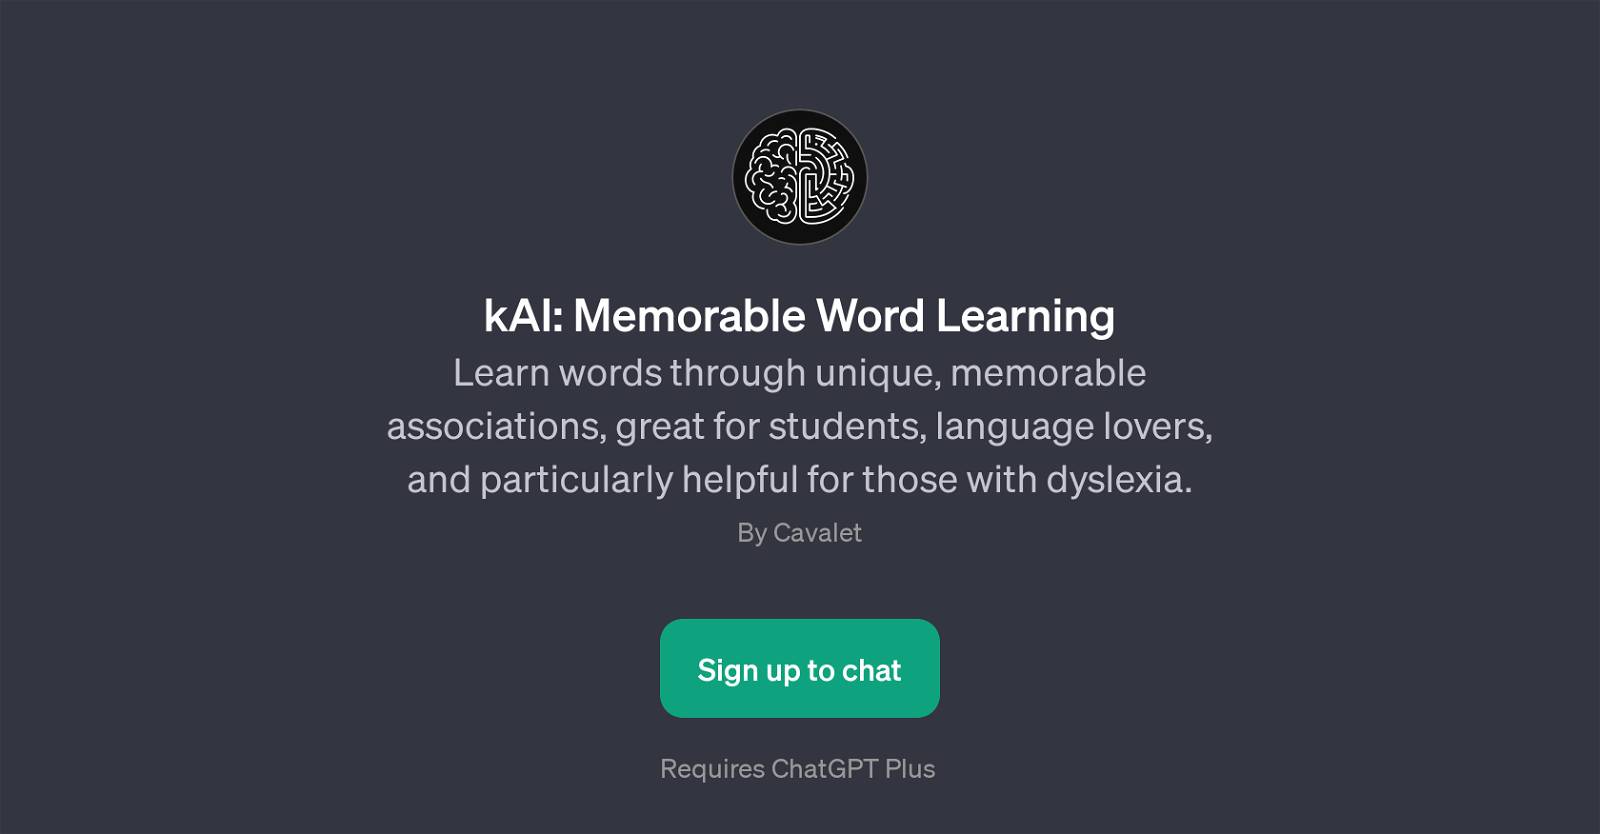 kAI: Memorable Word Learning website